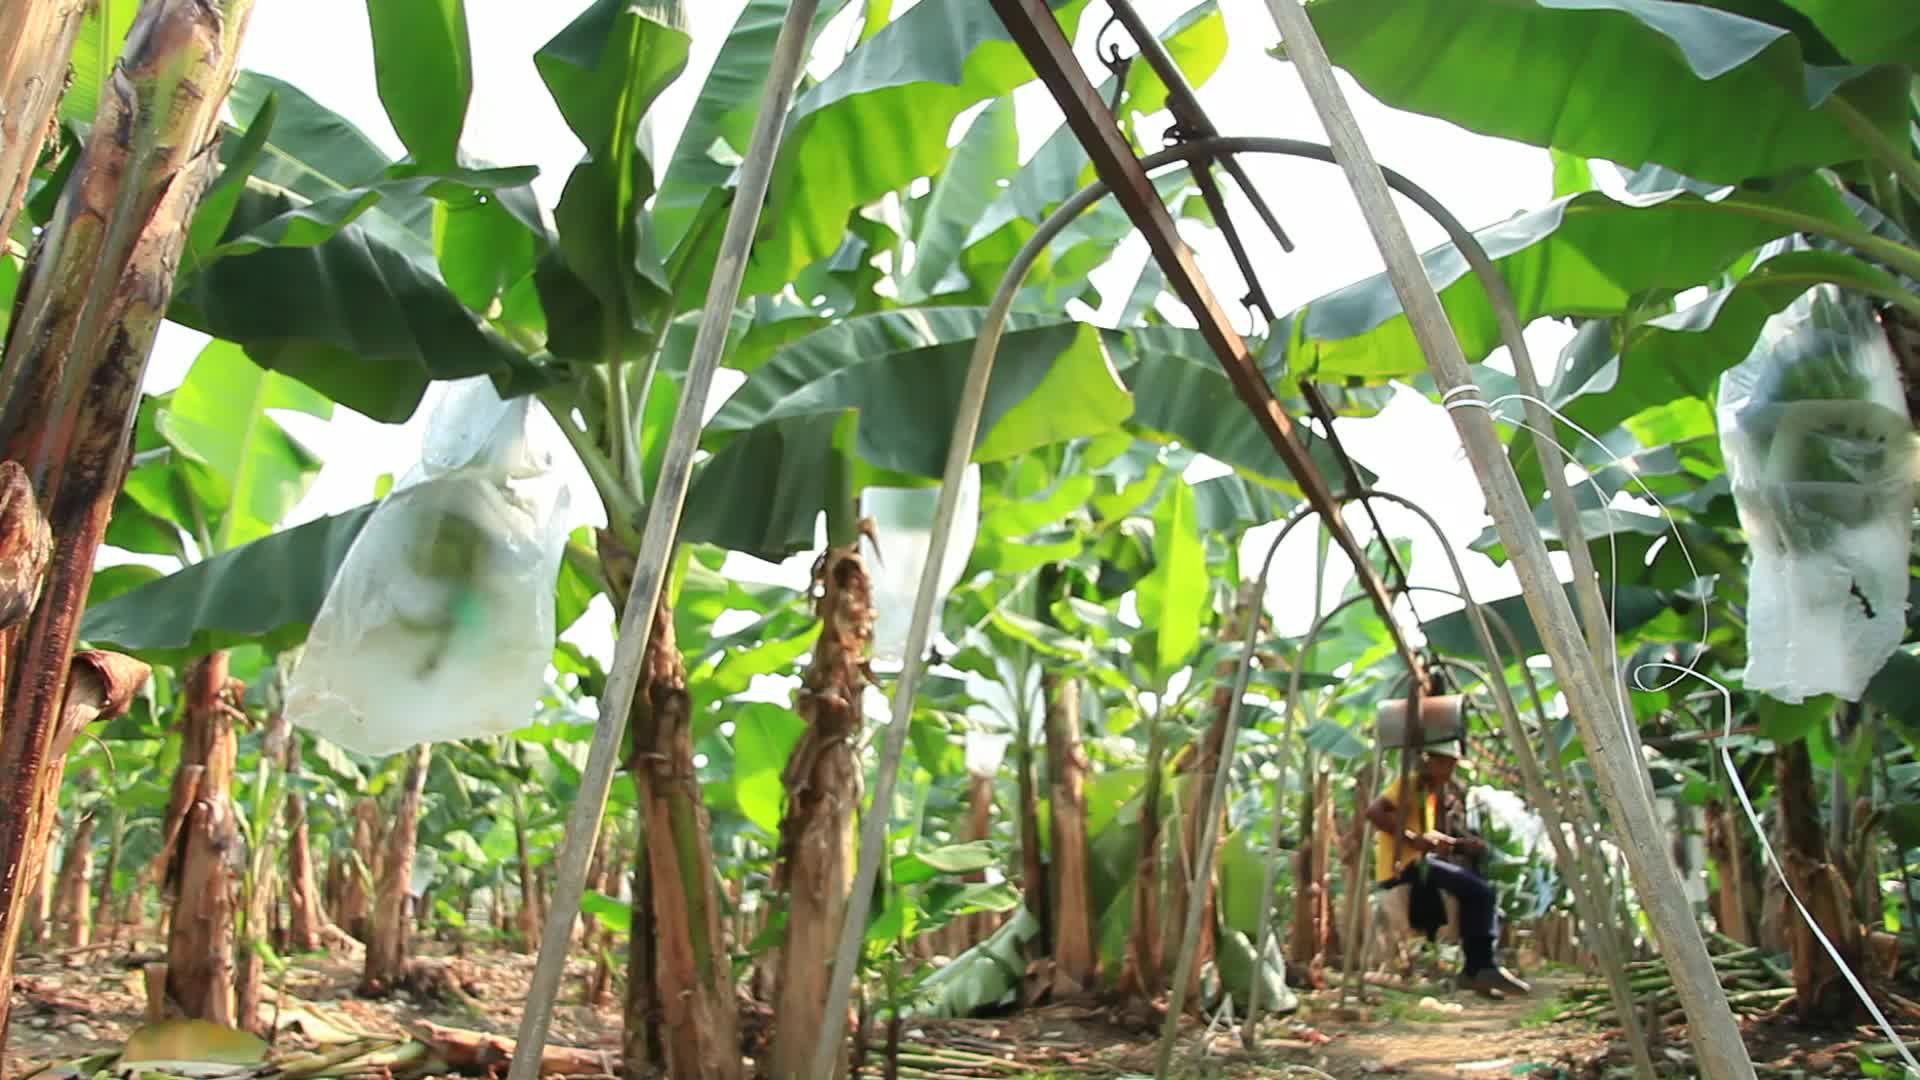 Banana Plantation in Ecuador - Tech - Videotime.com